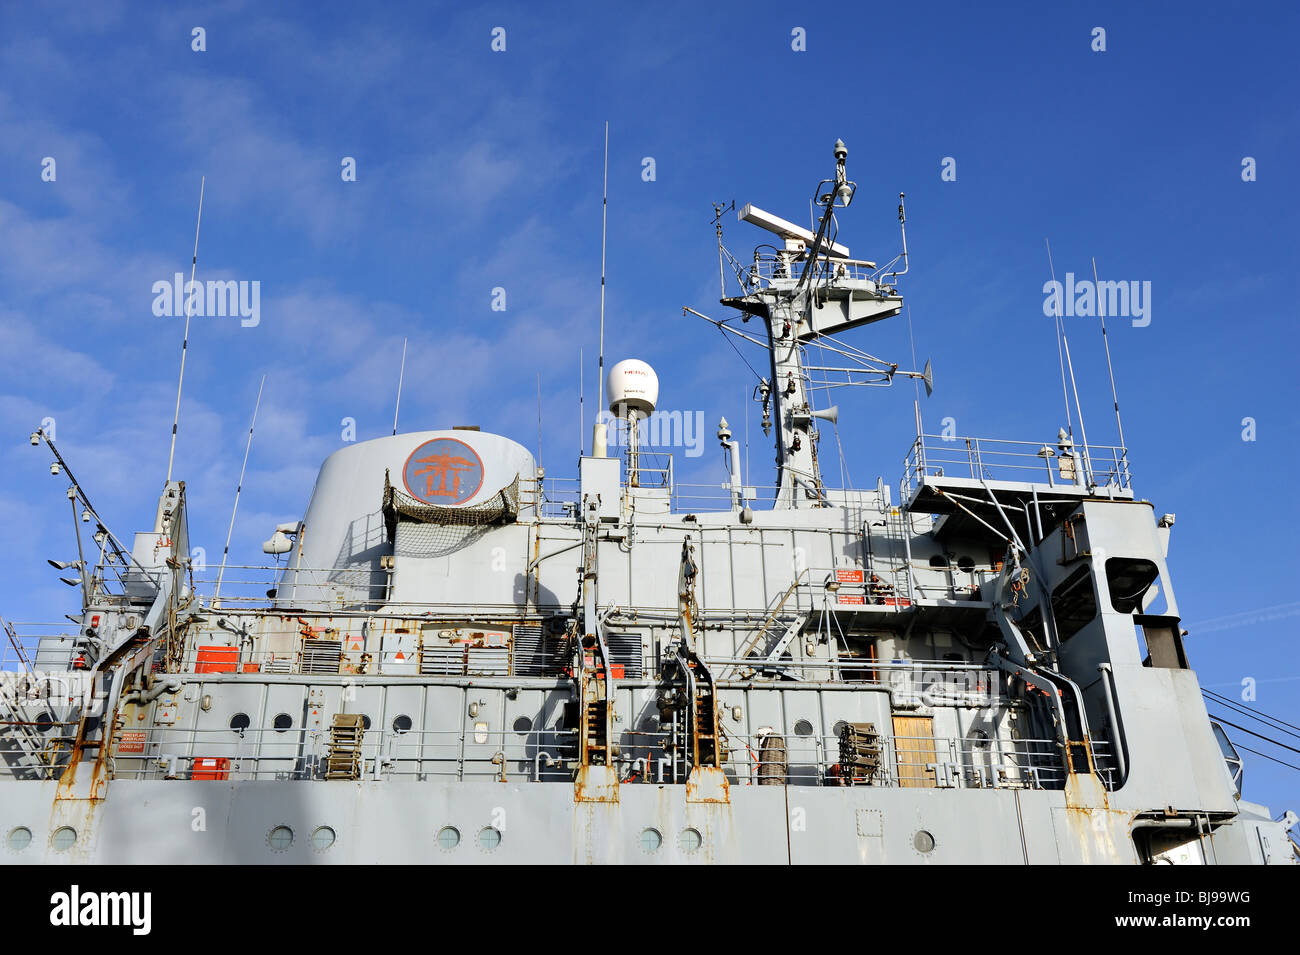 Radar and antennas on old Royal navy Ship Stock Photo